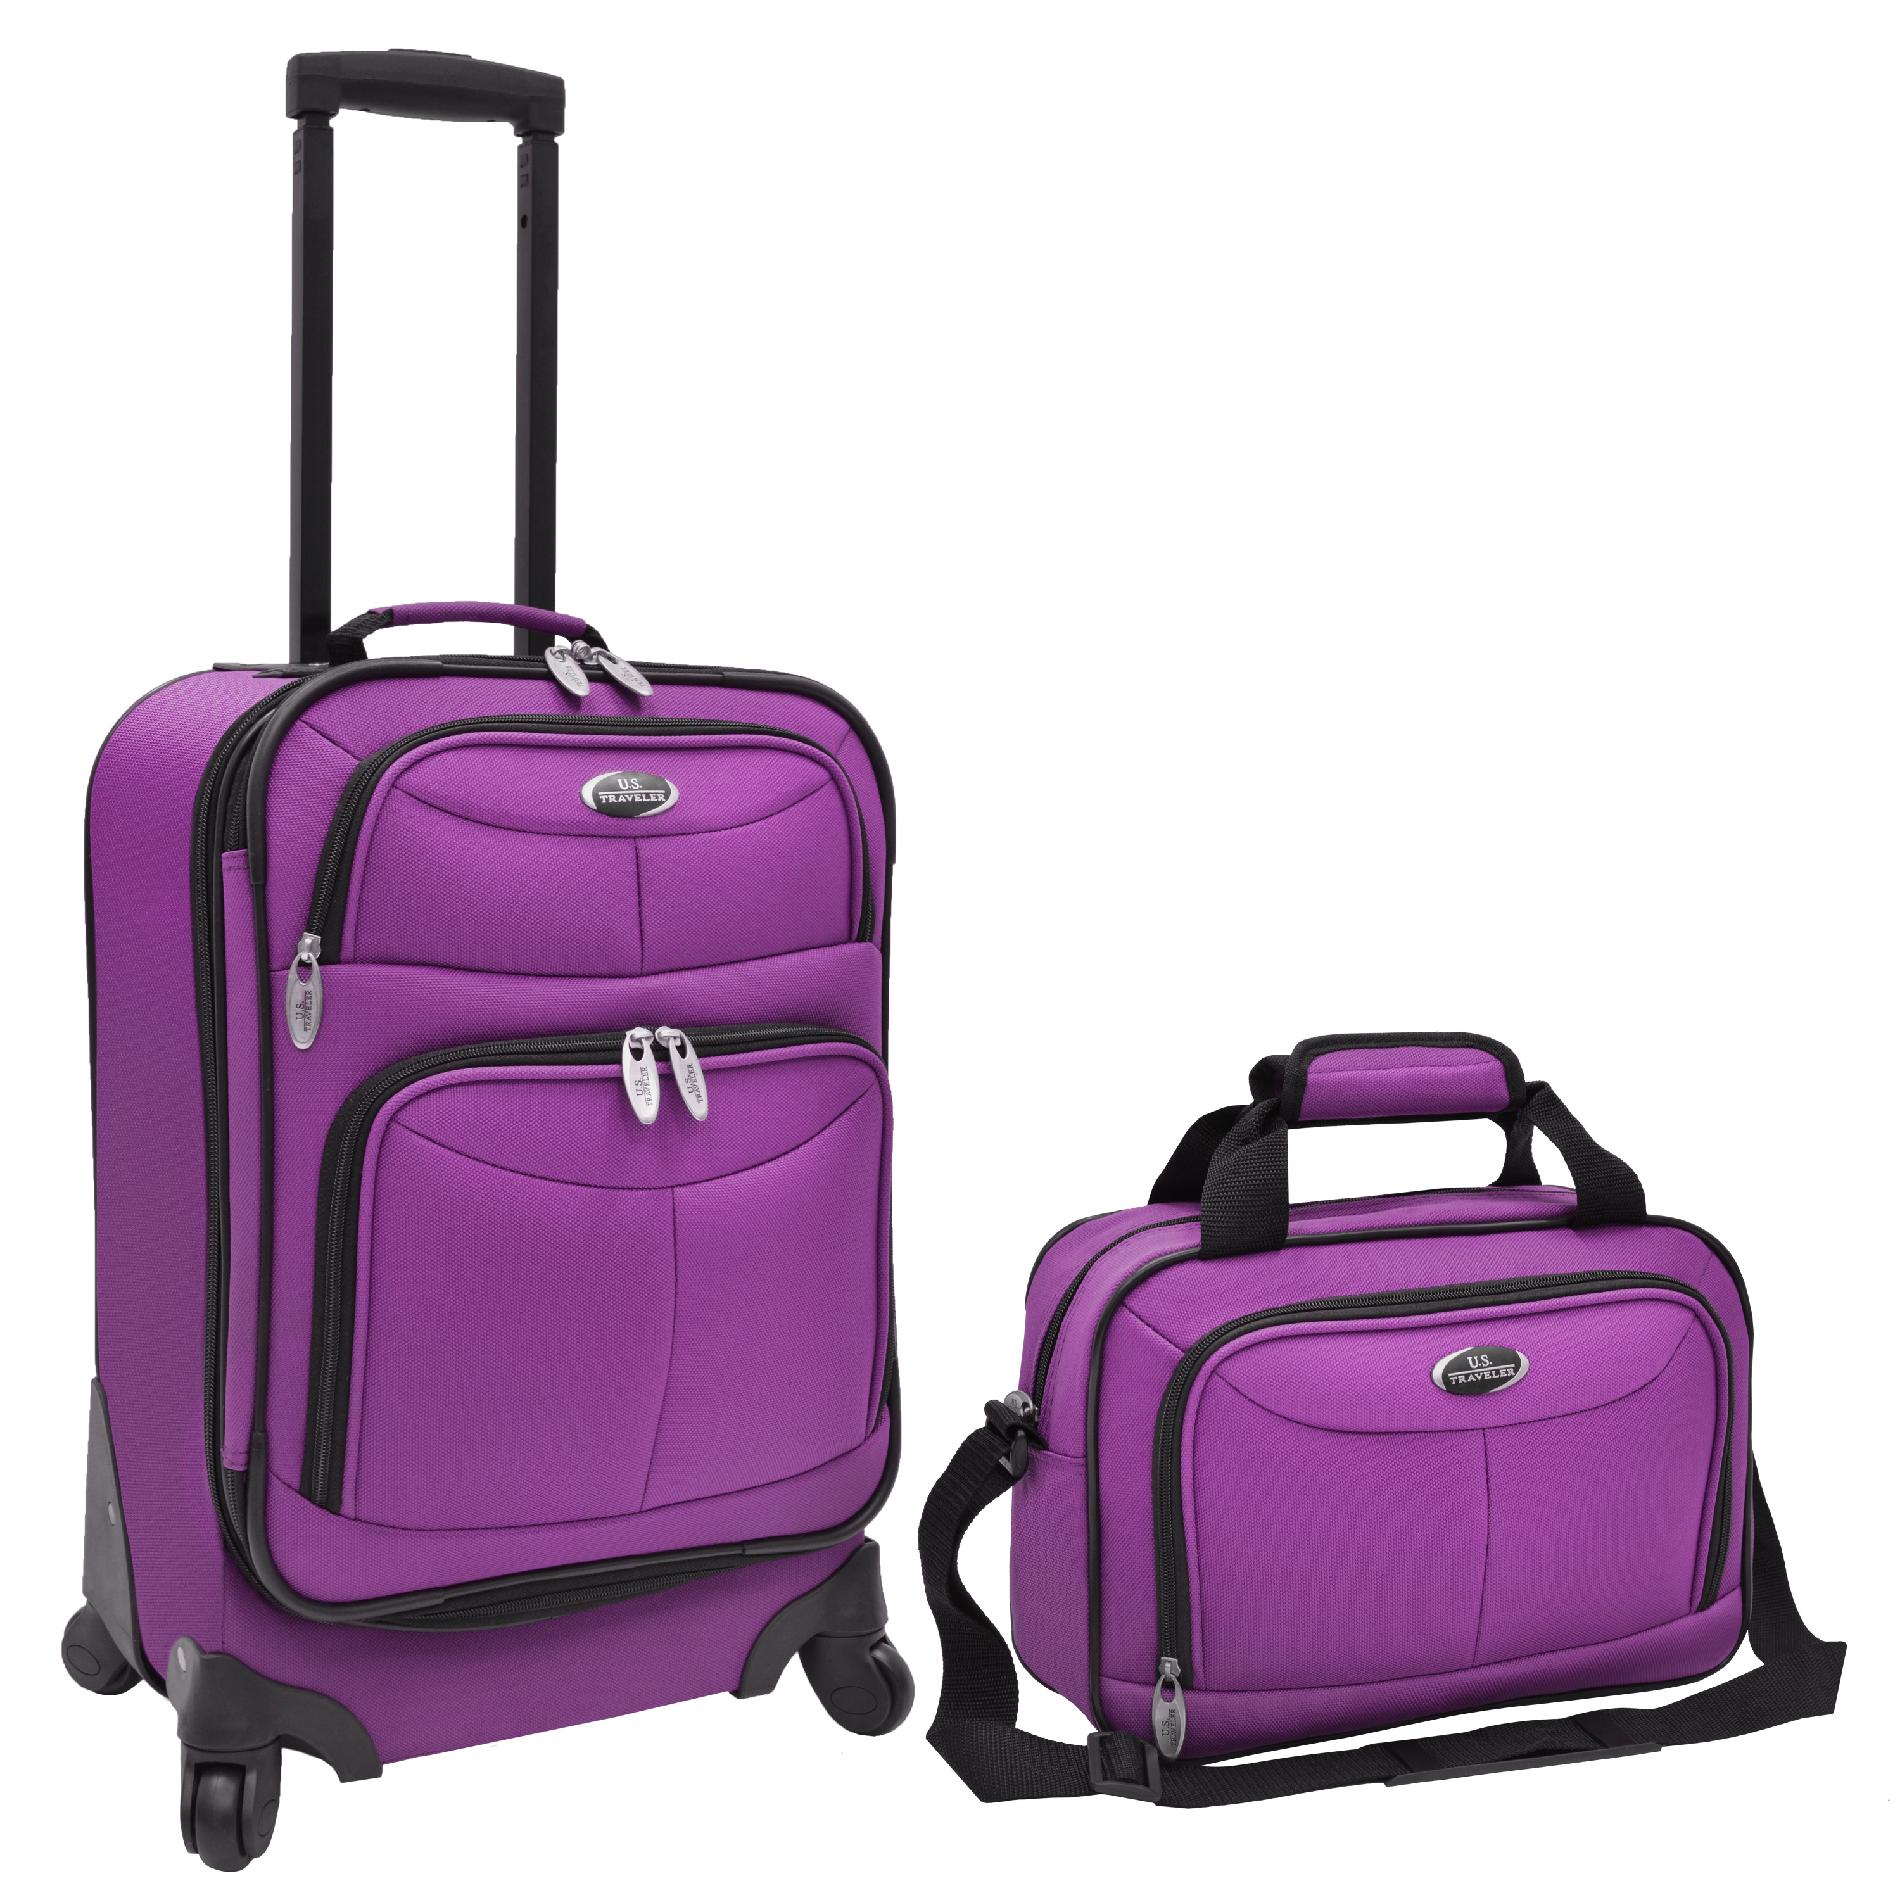 U.S. Traveler Clovis 2 Piece Luggage Set, Purple